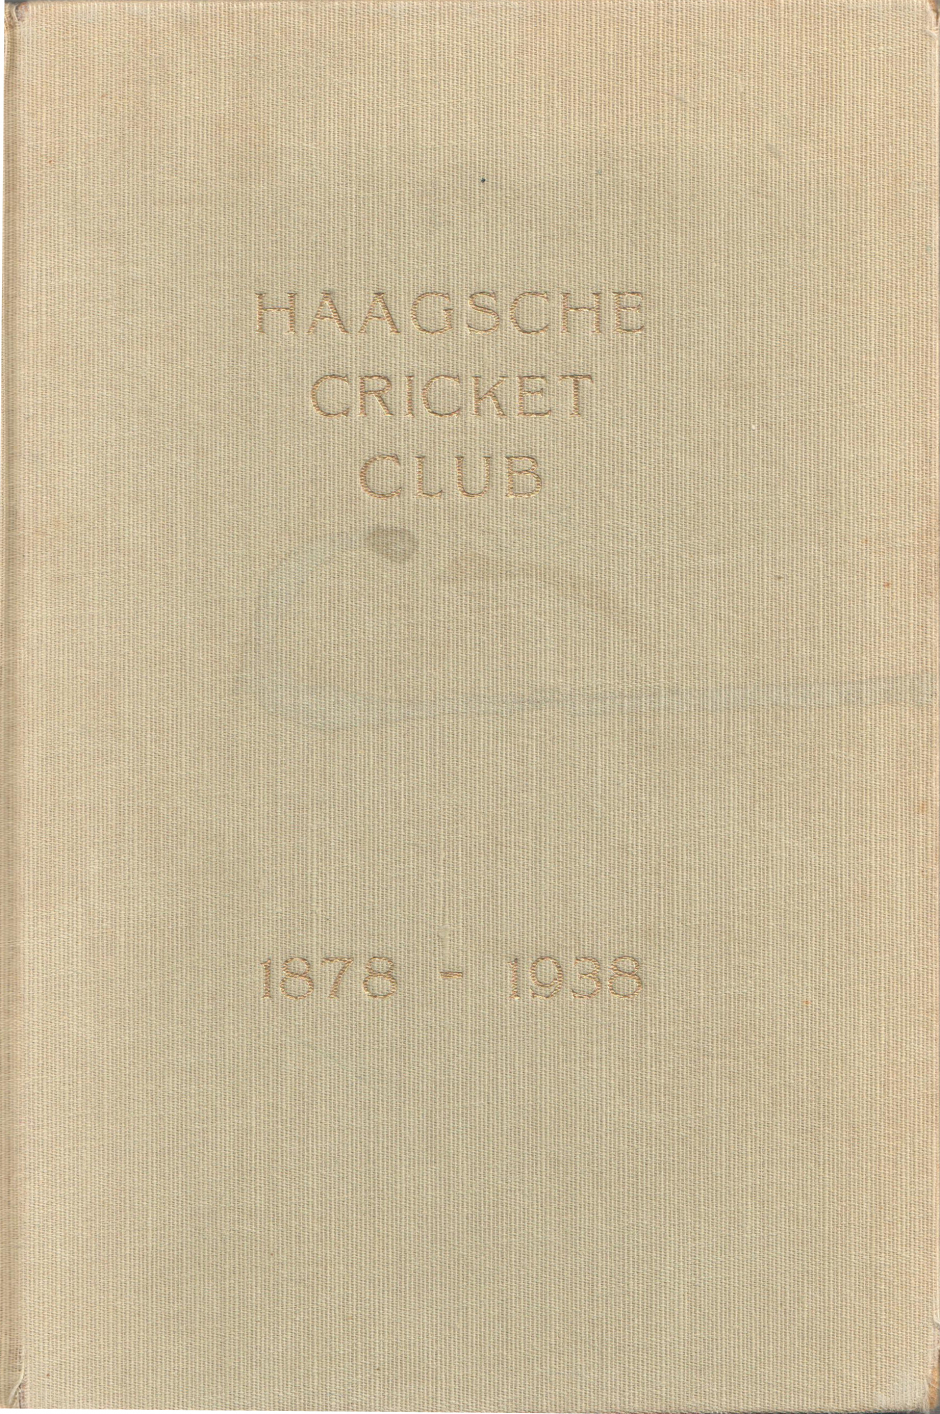 Haagsche Cricket Club 1878-1938